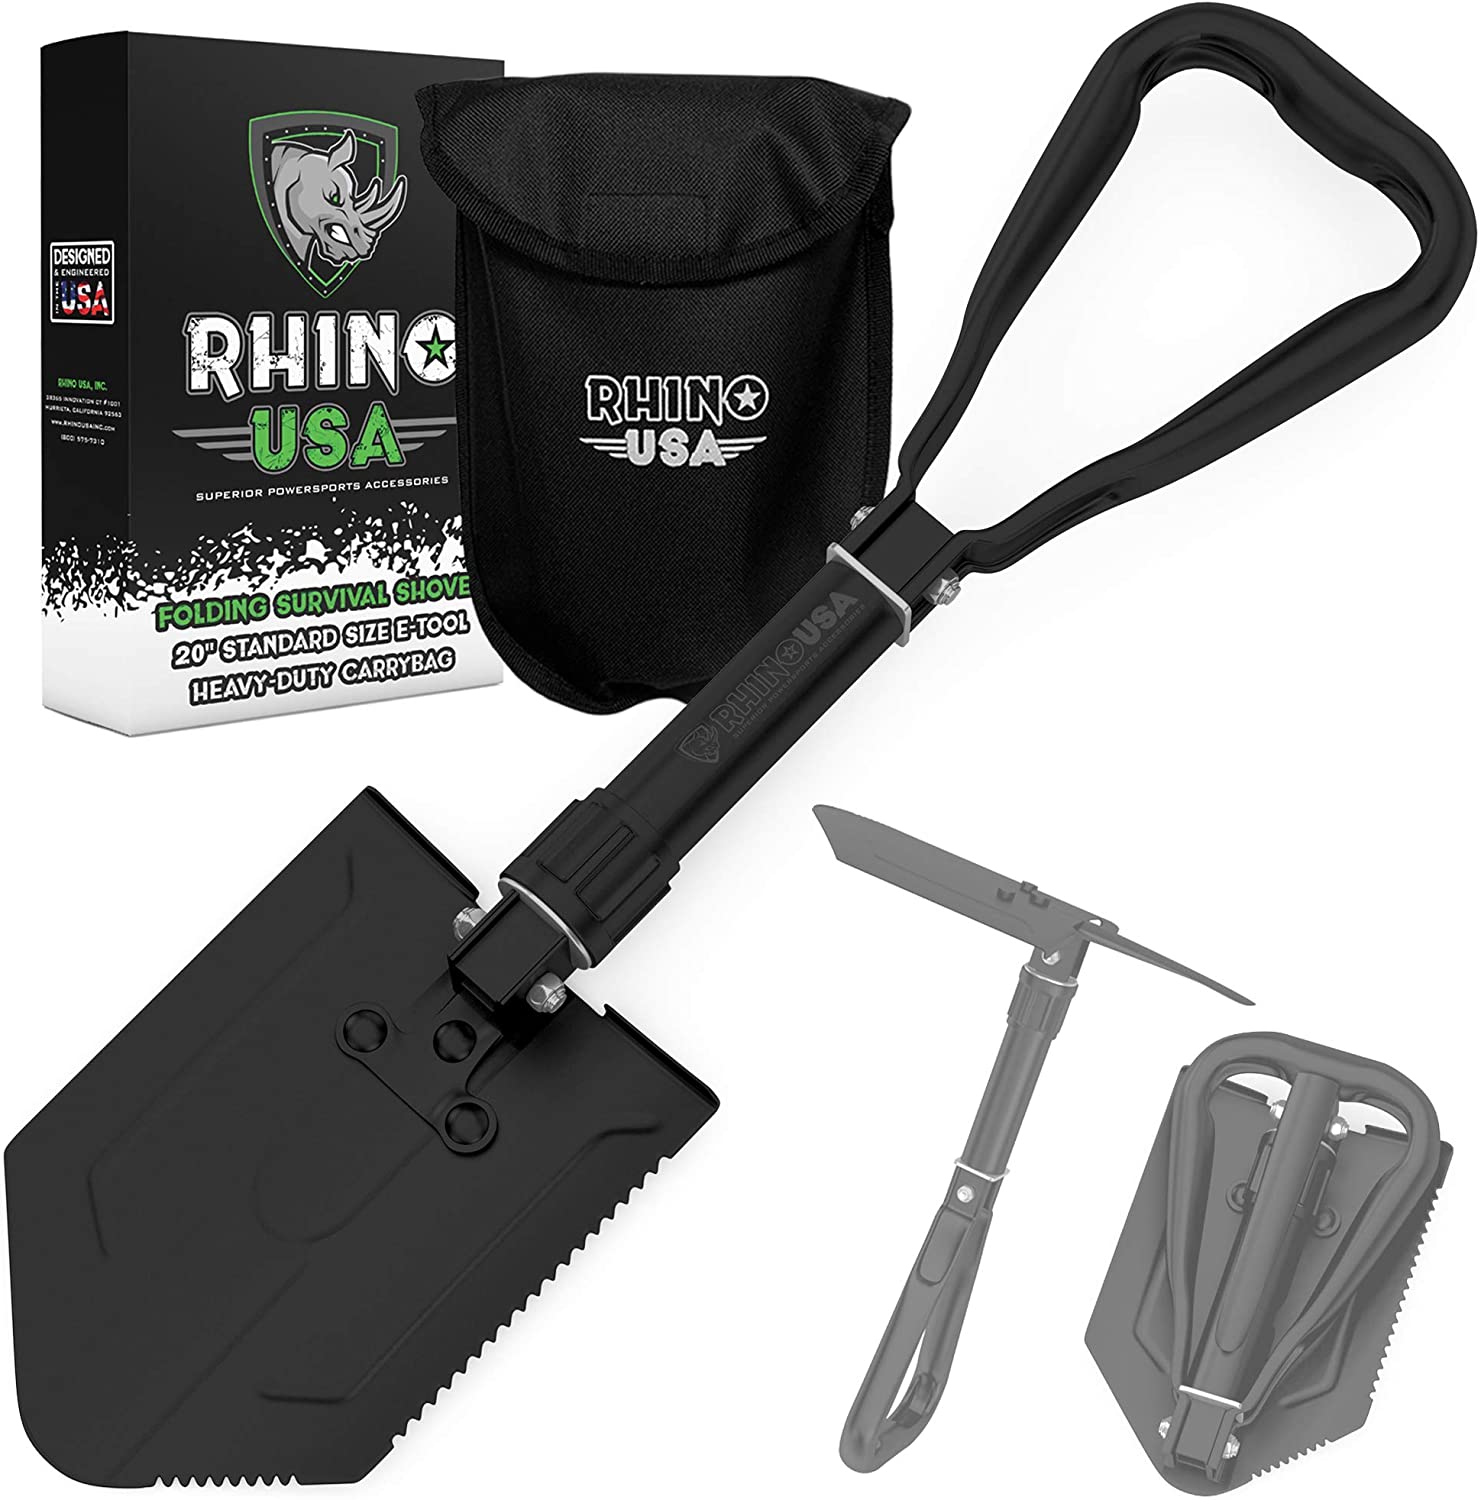 Rhino USA Folding Survival Entrenching Shovel With Pick